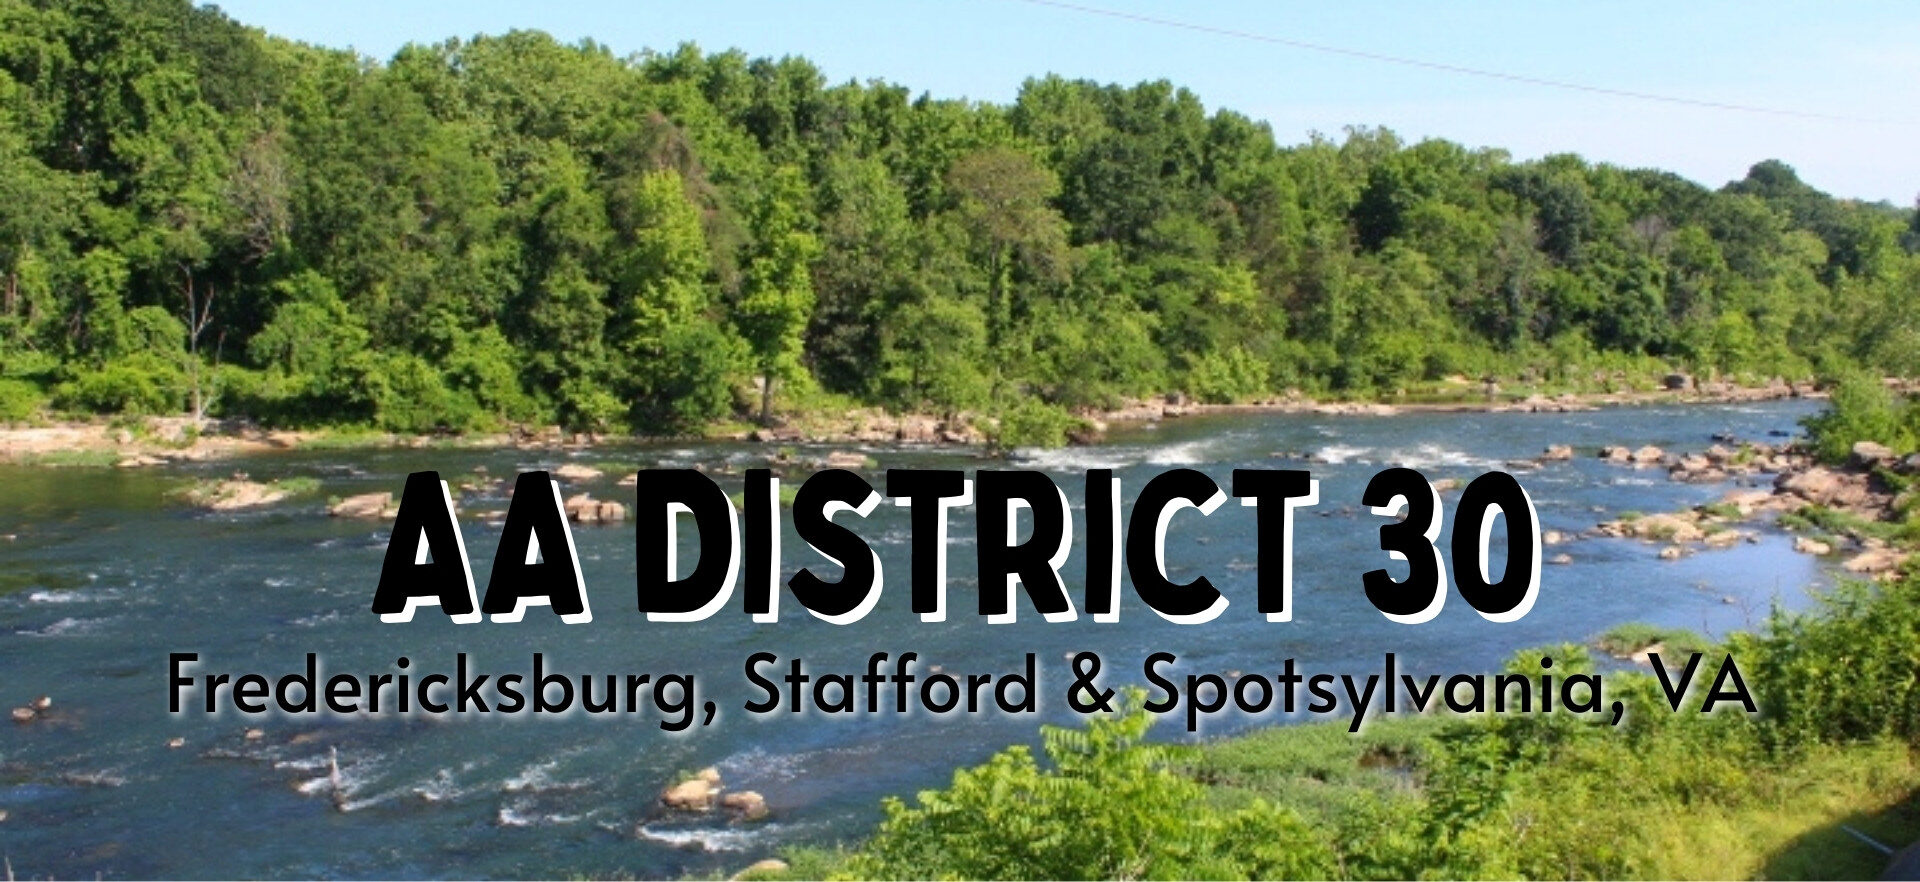 AA District 30 Virginia